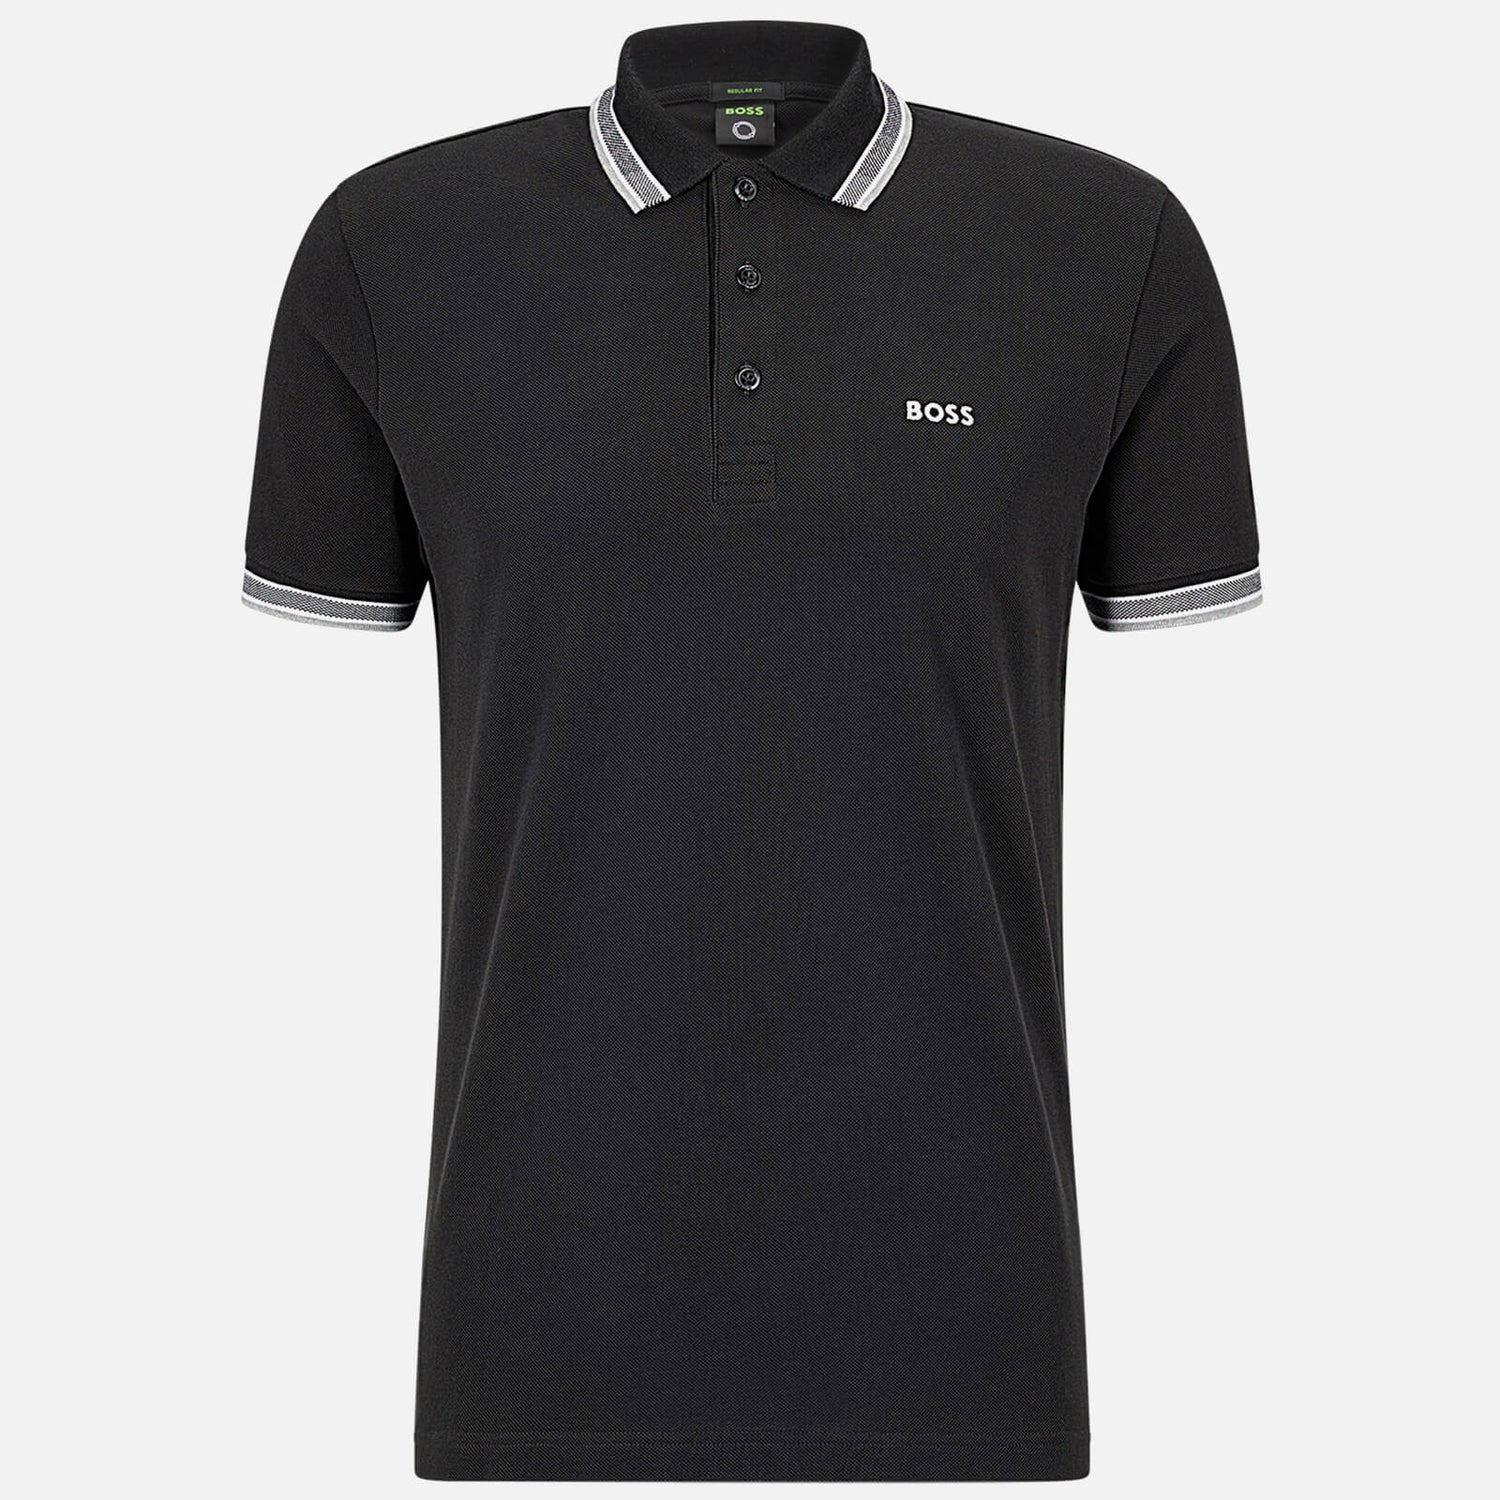 BOSS Athleisure Men's Paddy Polo Shirt - Black - S